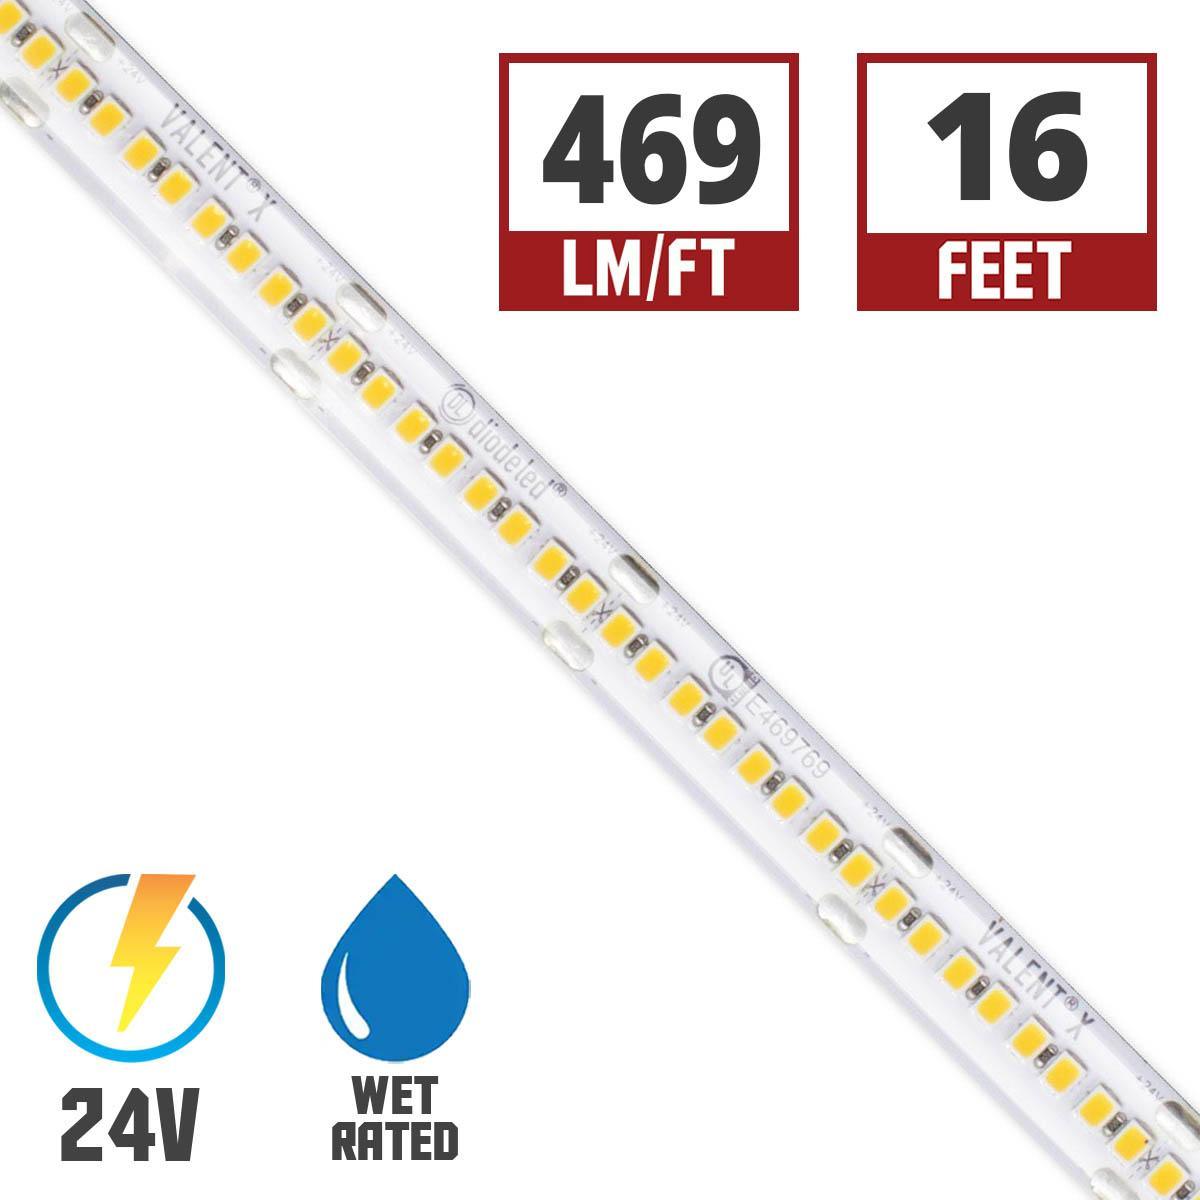 Valent X High Density LED Strip Light, 16ft Reel, 24V, IP65 Wet locations